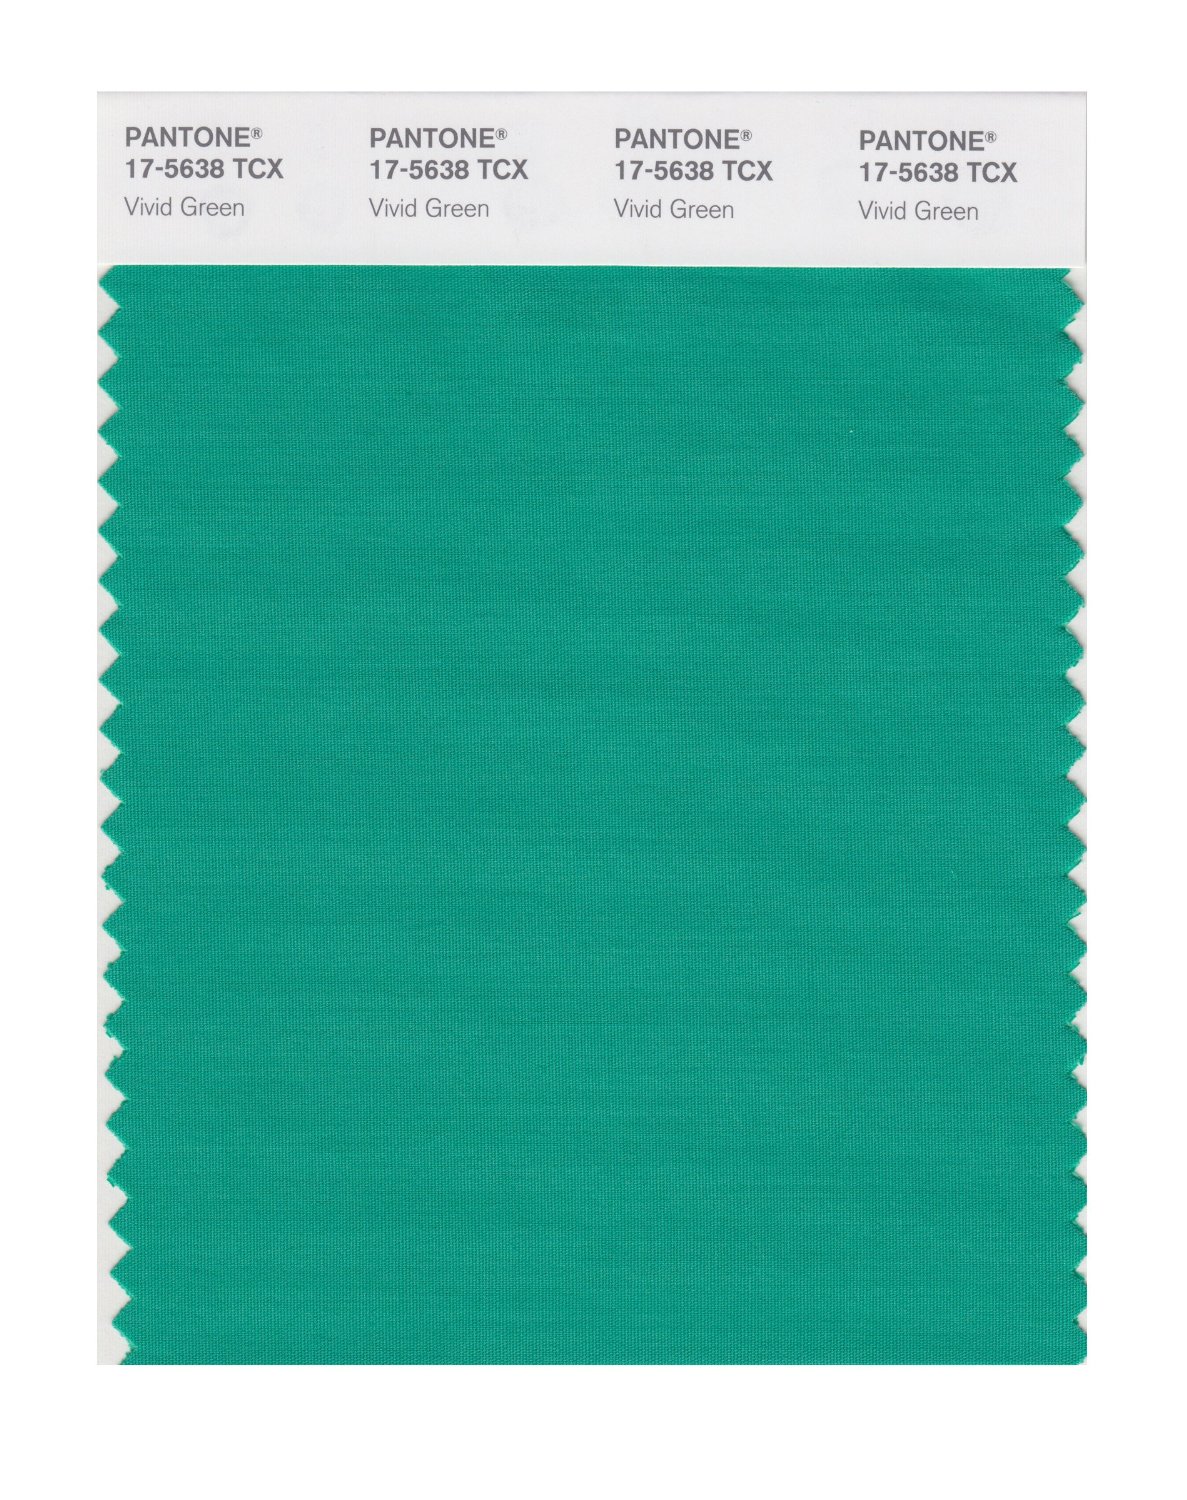 Pantone Cotton Swatch 17-5638 Vivid Green.